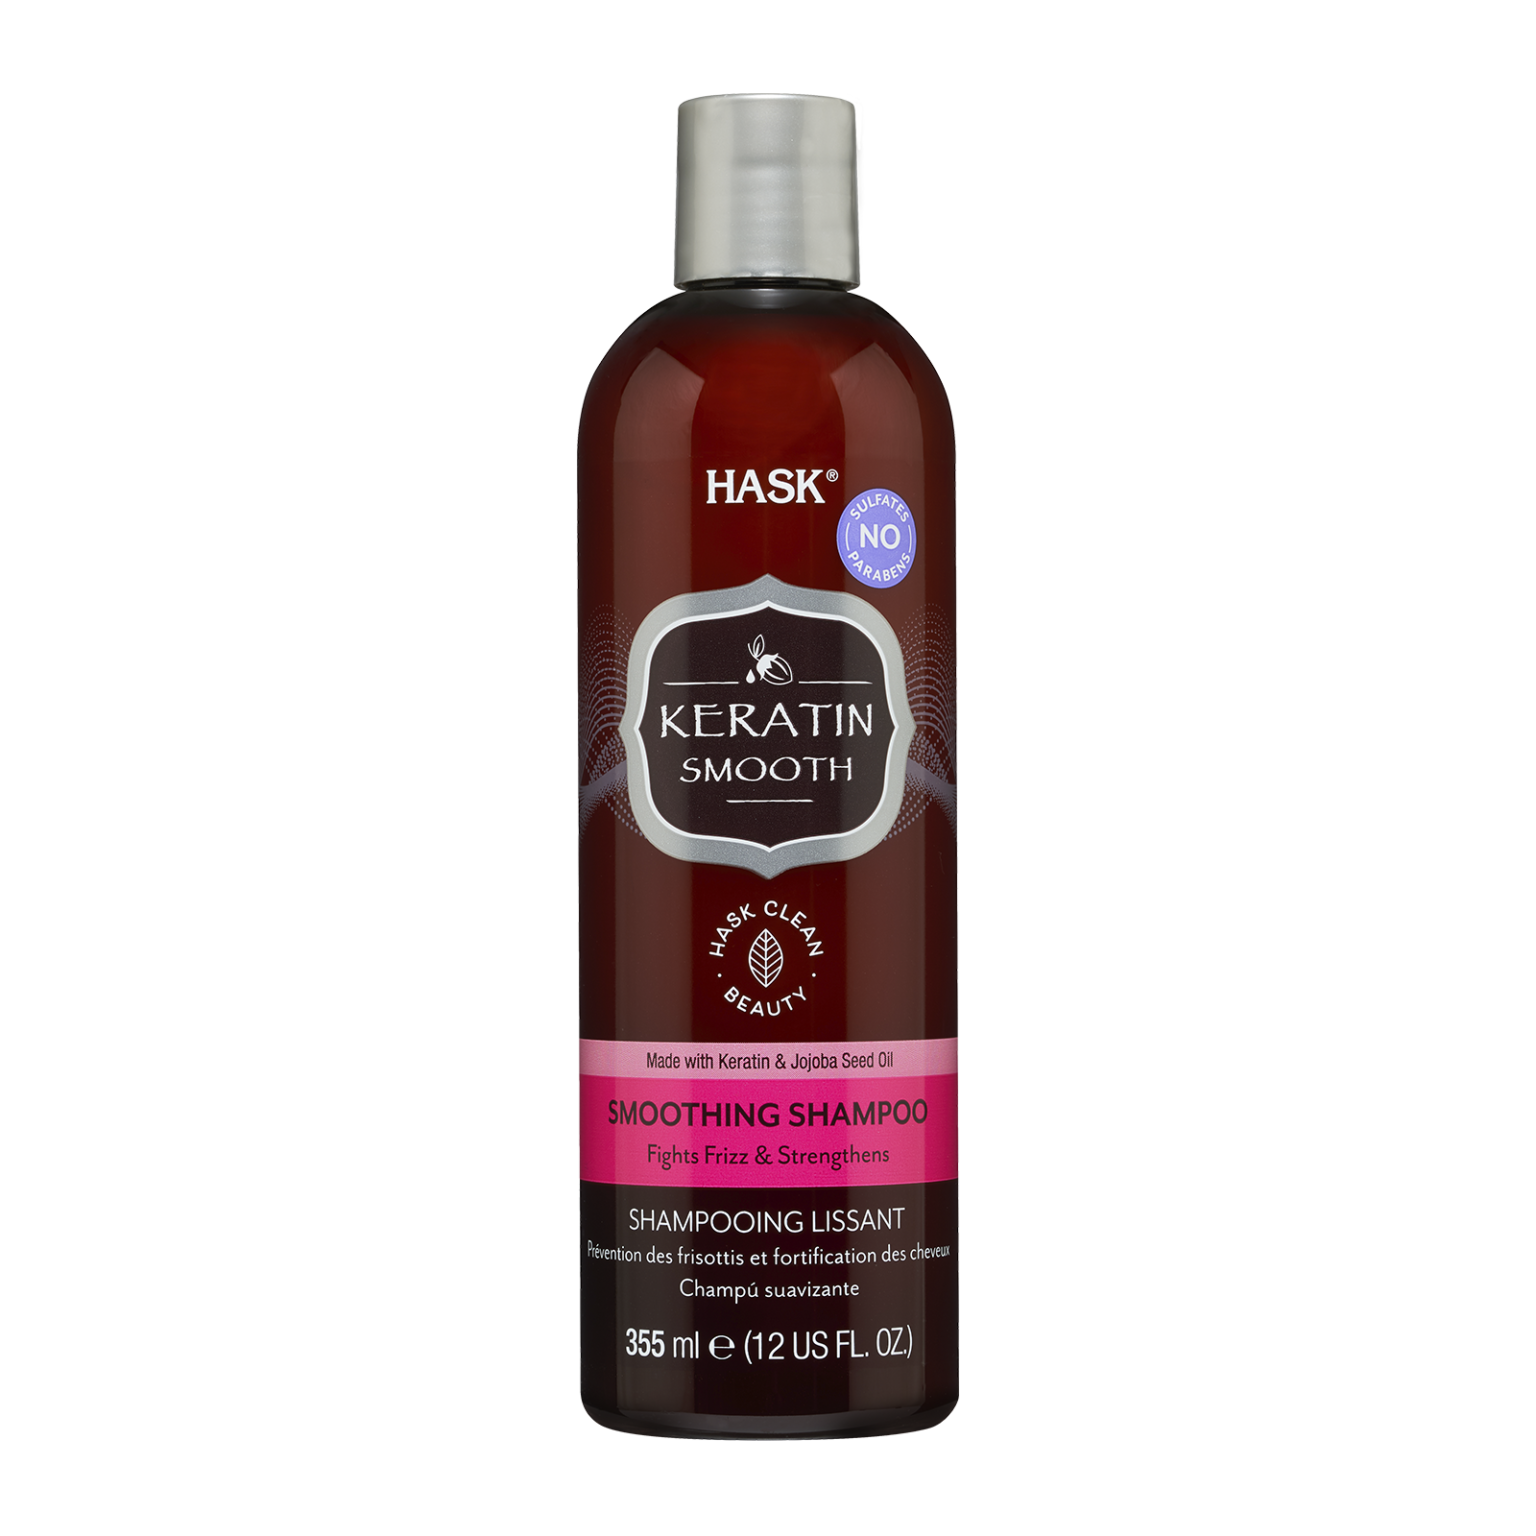 Hask Shampoo Keratin Protein Smoothing, 12 Fl Oz (Pack of 2)